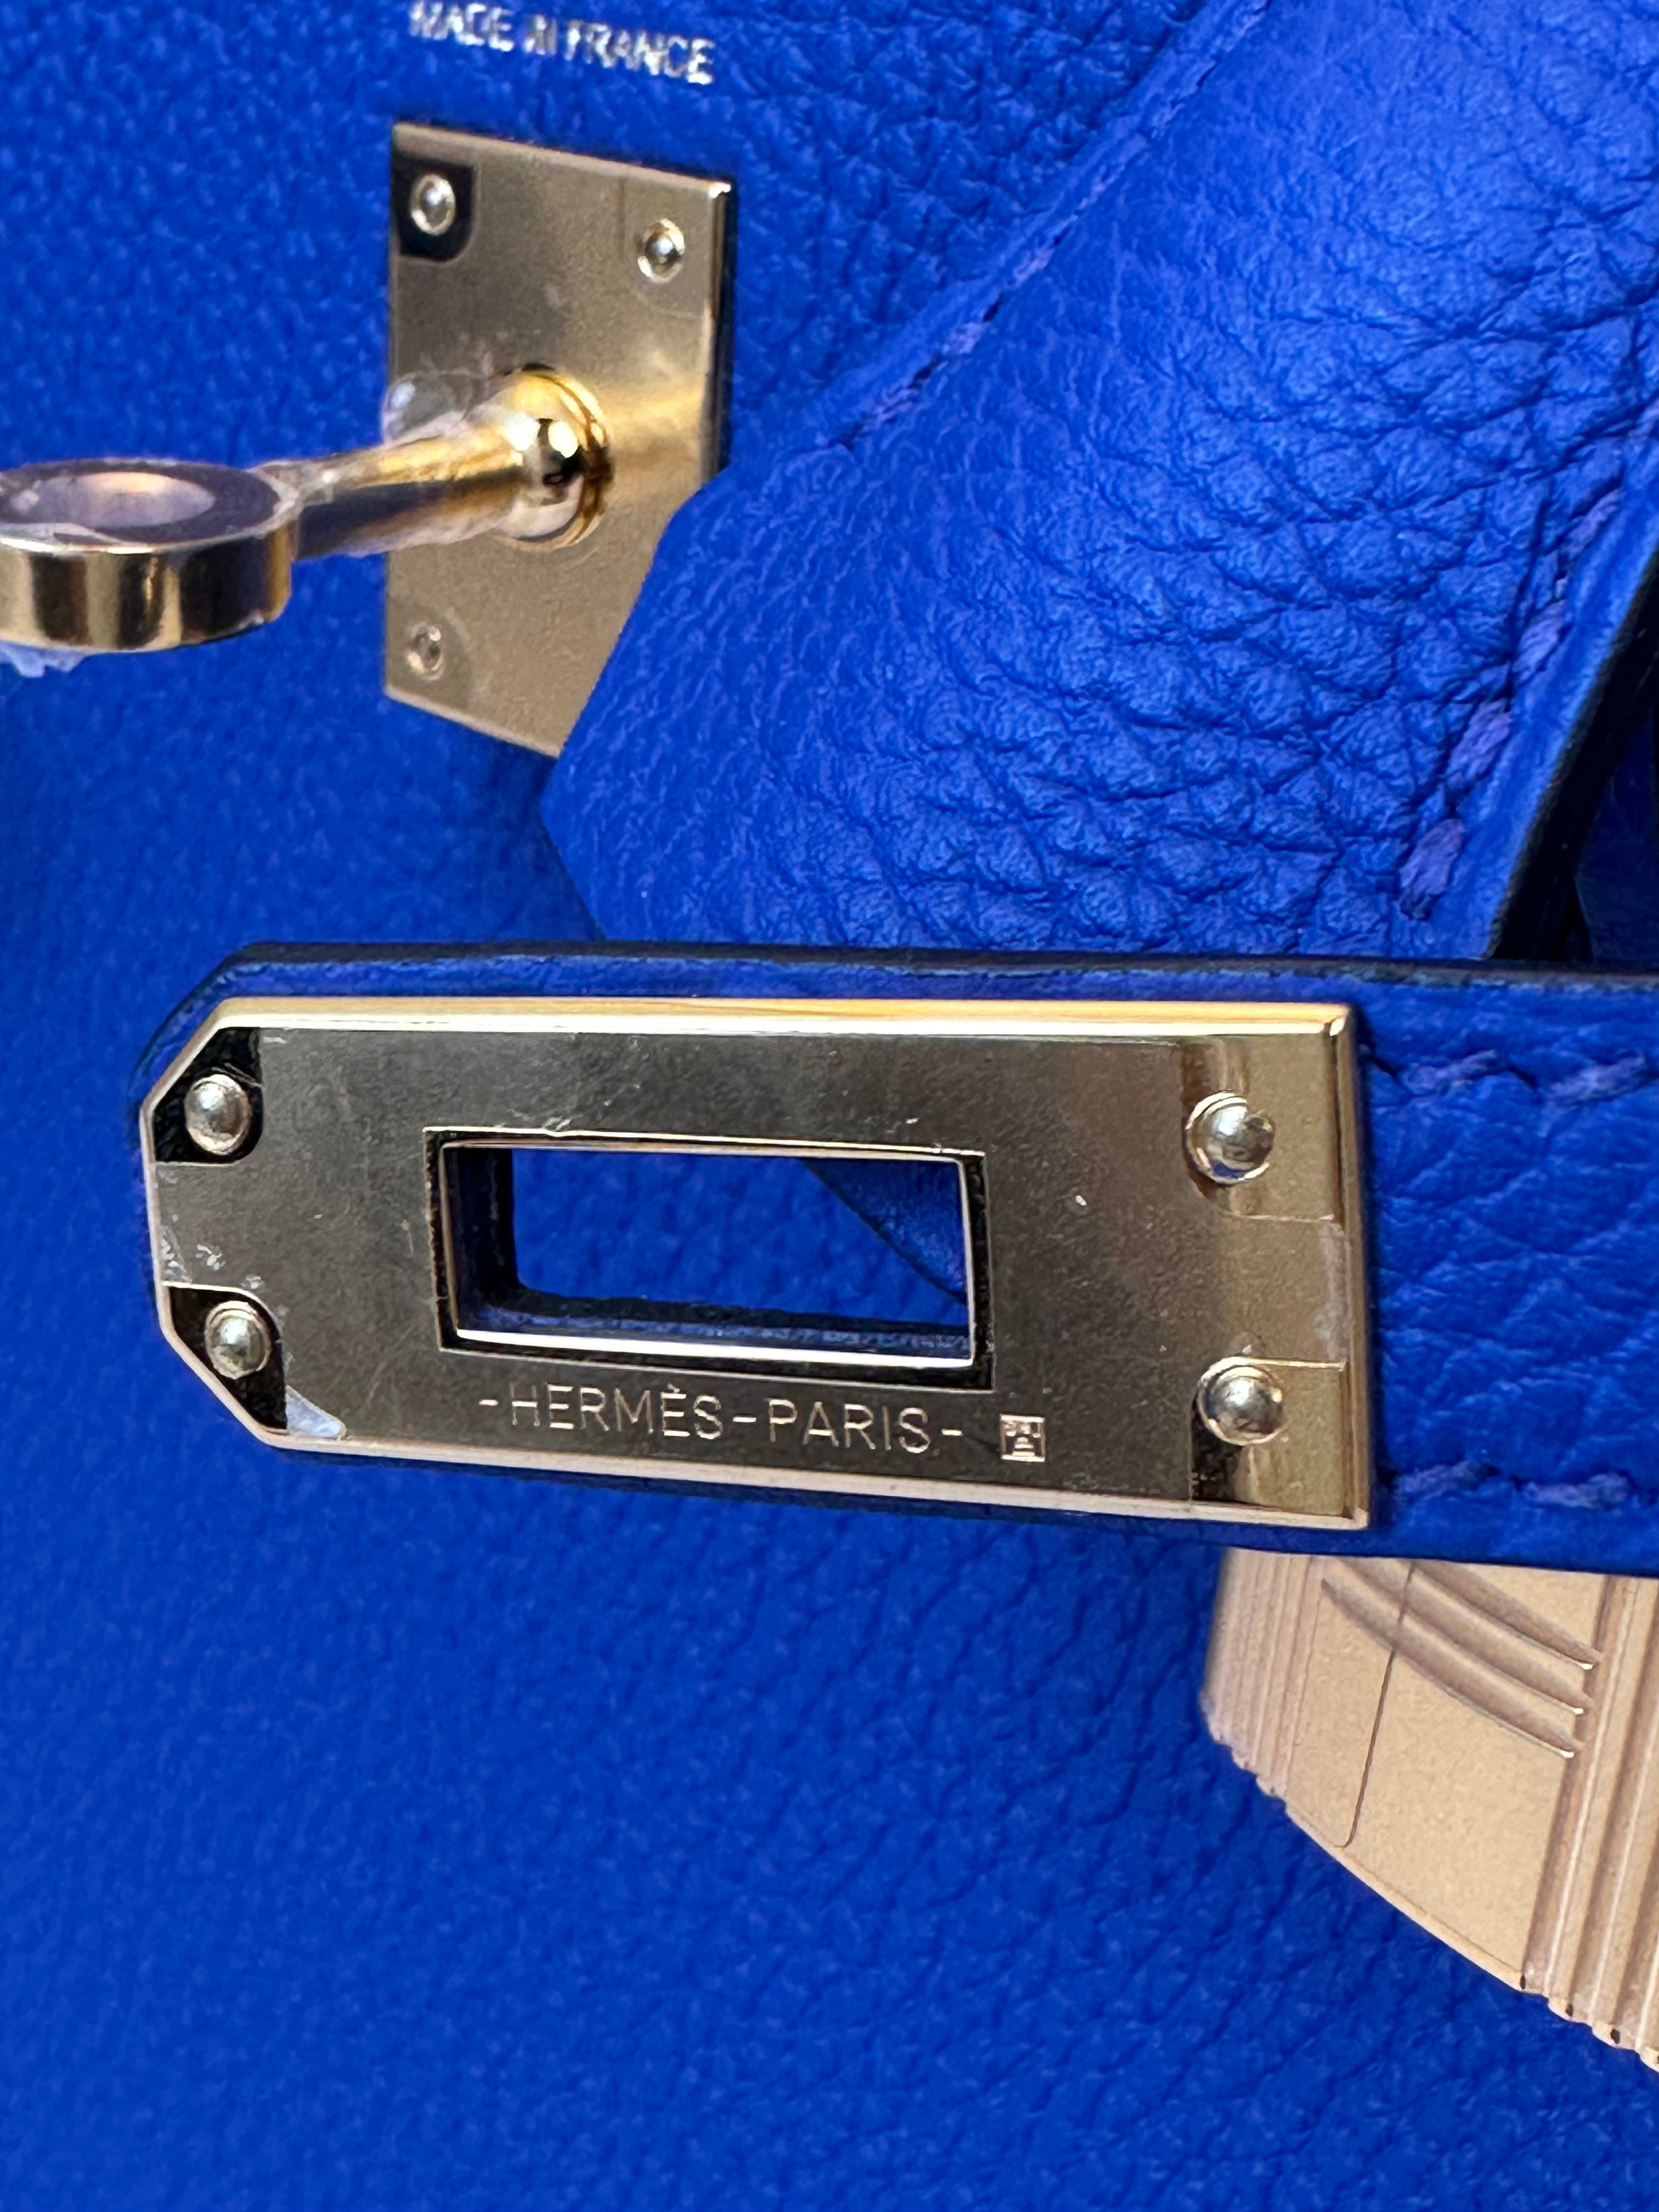 HERMES KELLY 25 TOGO BLUE ROYALE HANDBAG GOLD HARDWARE close up from the locks